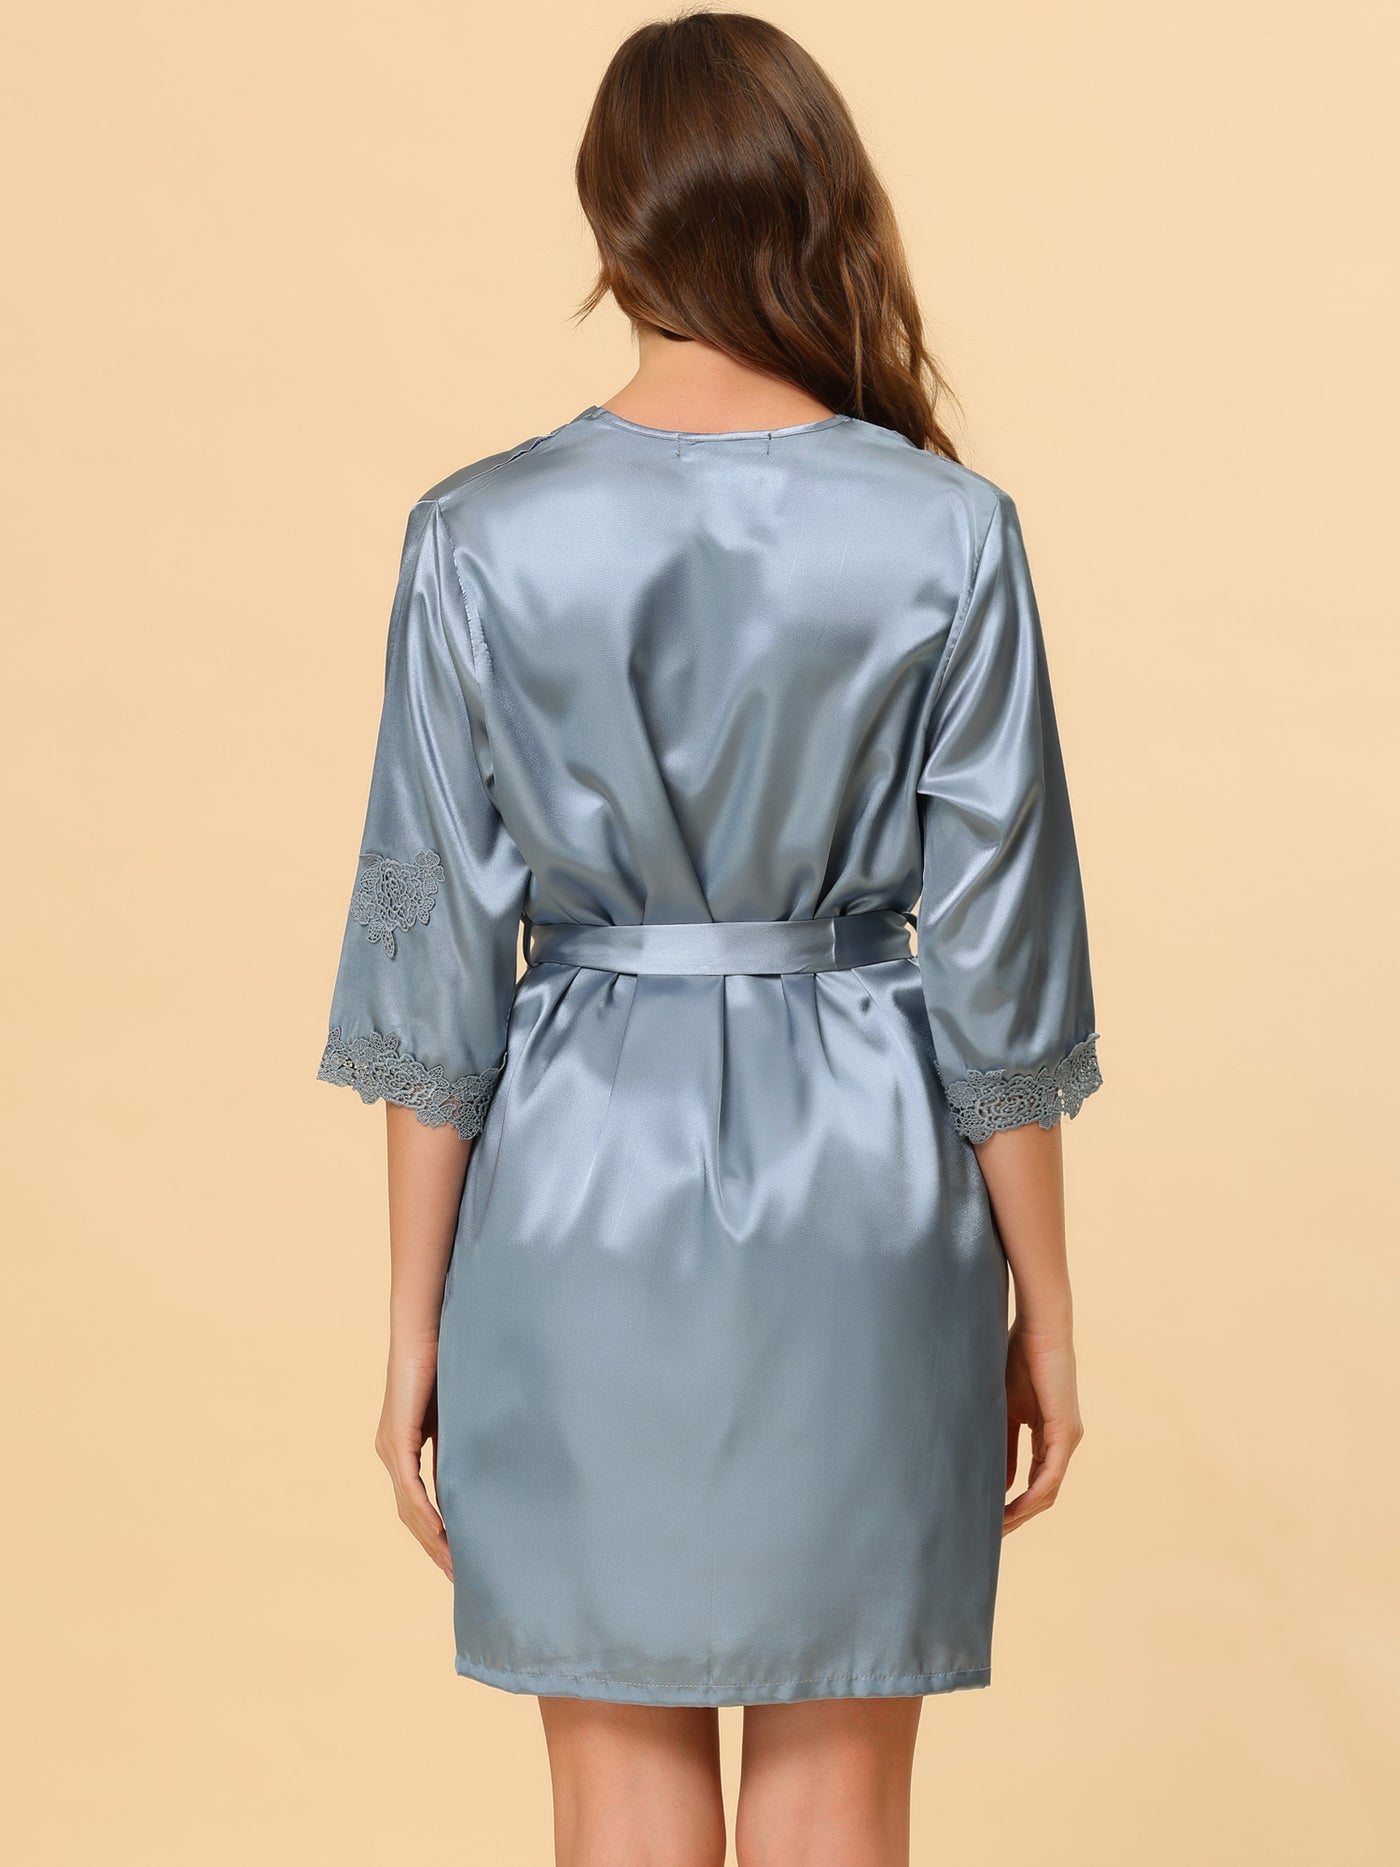 Bublédon Women's 4pcs Silk Satin Cami Top Sexy Nightgown Lace Robe Sets